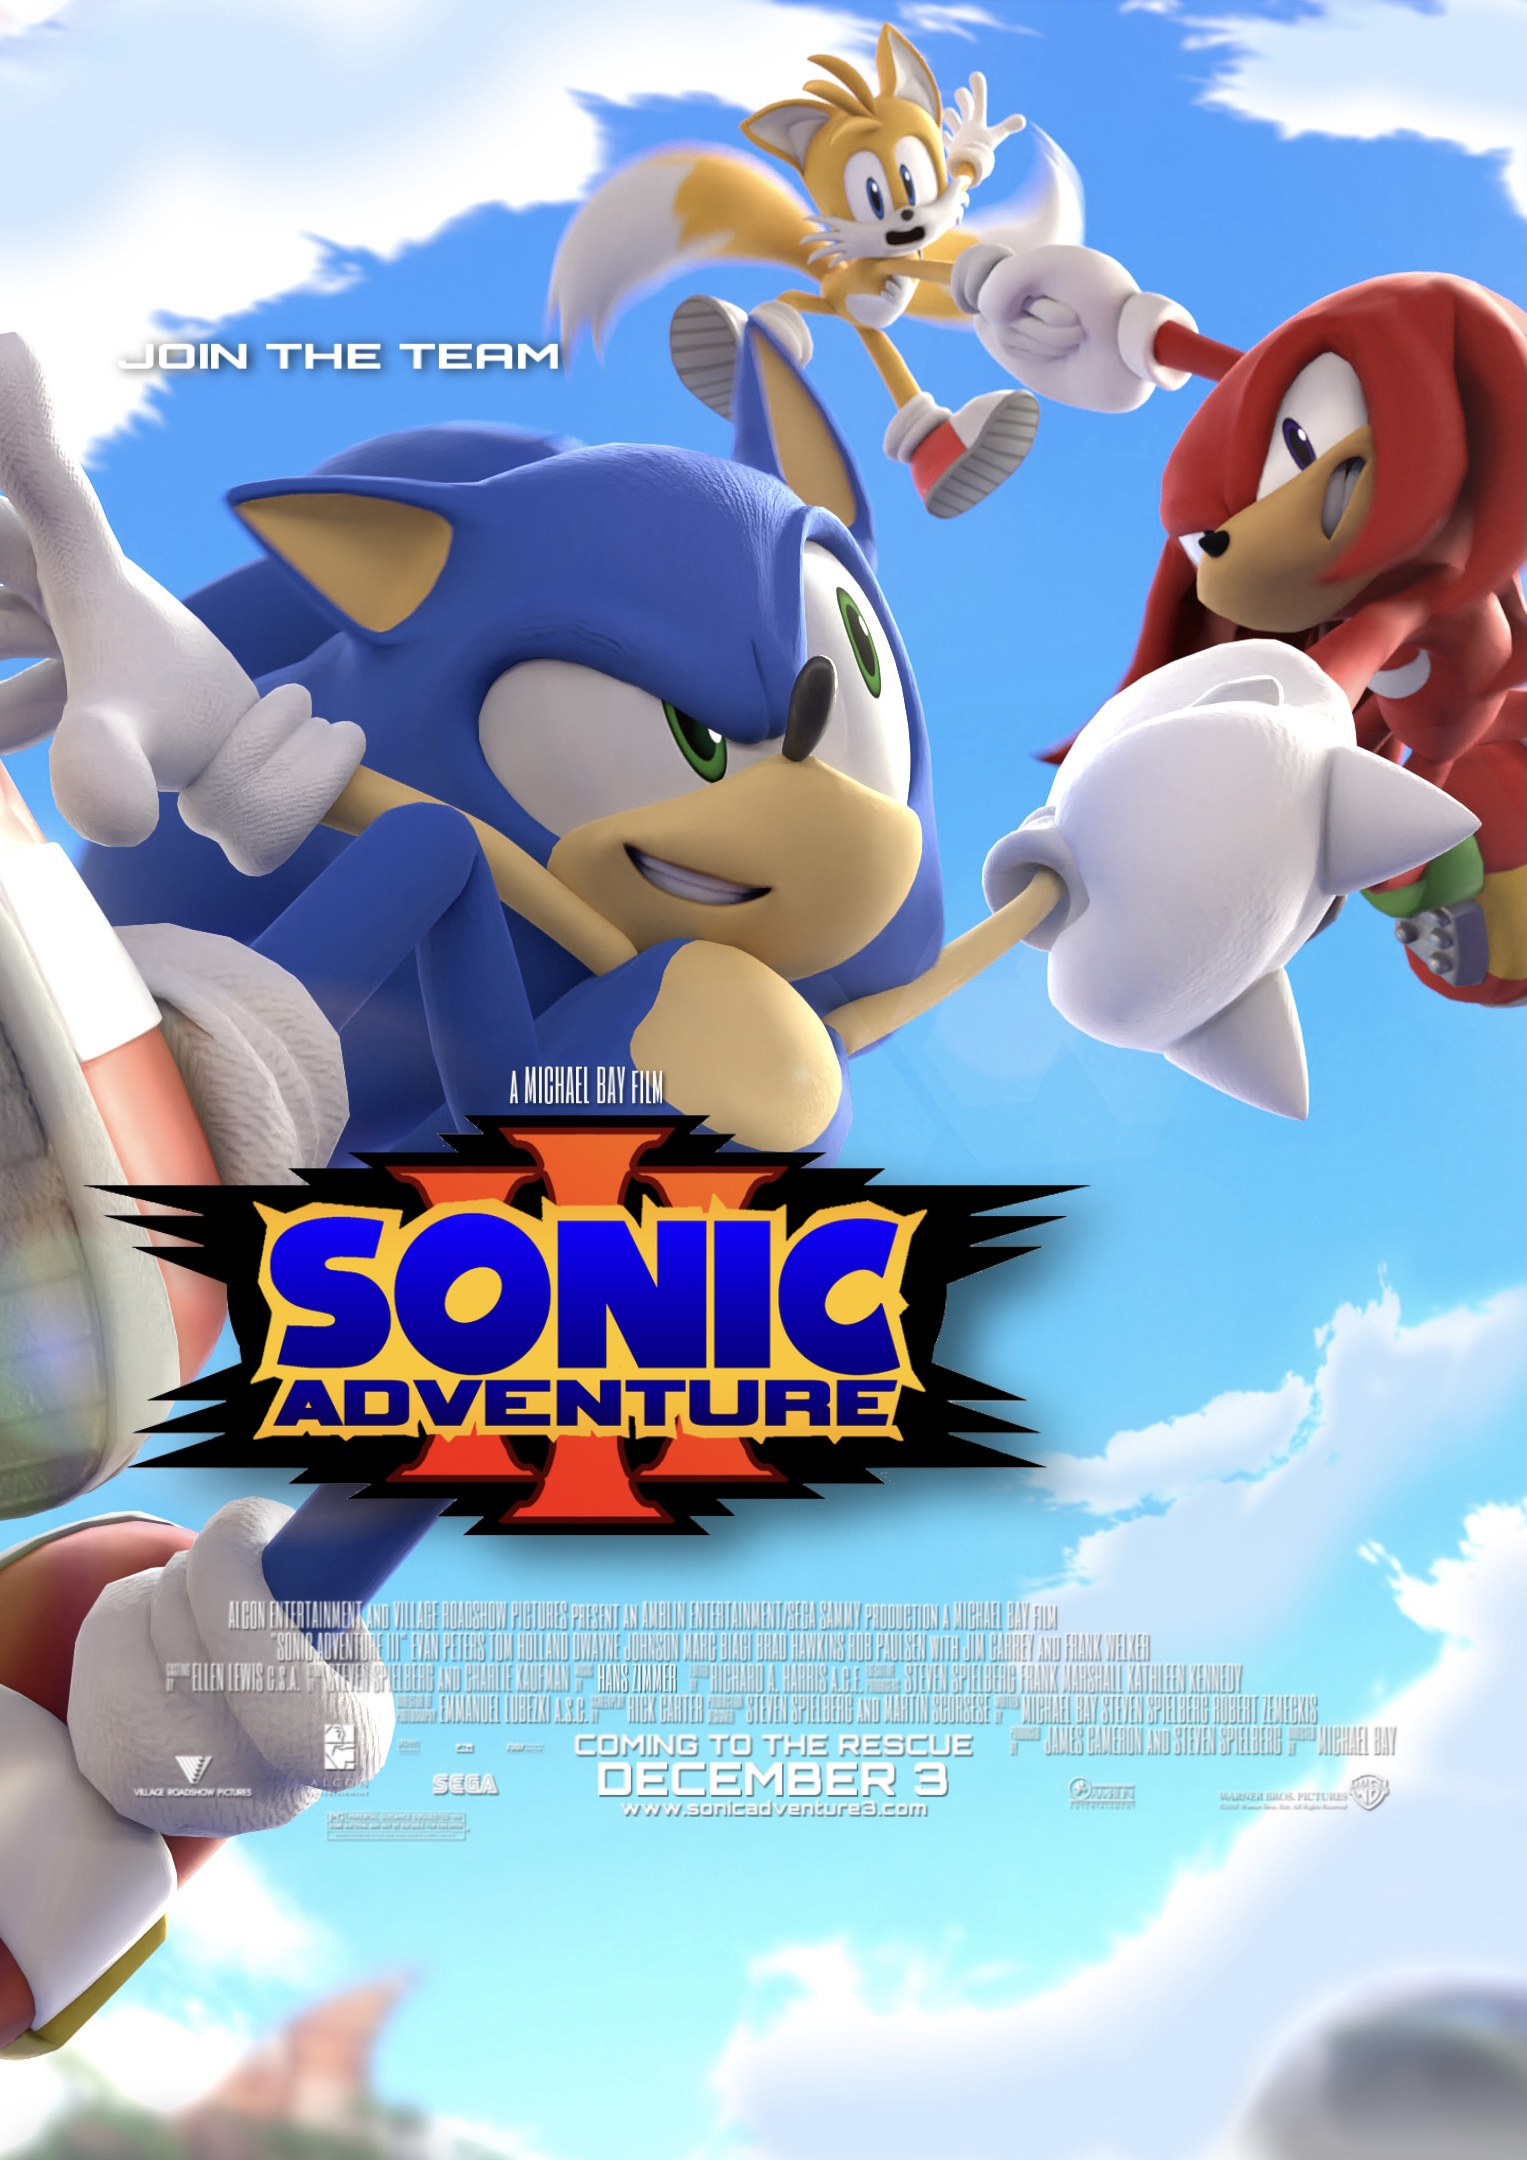 Sonic o Ouriço, Mundo Sonic Boom Wiki